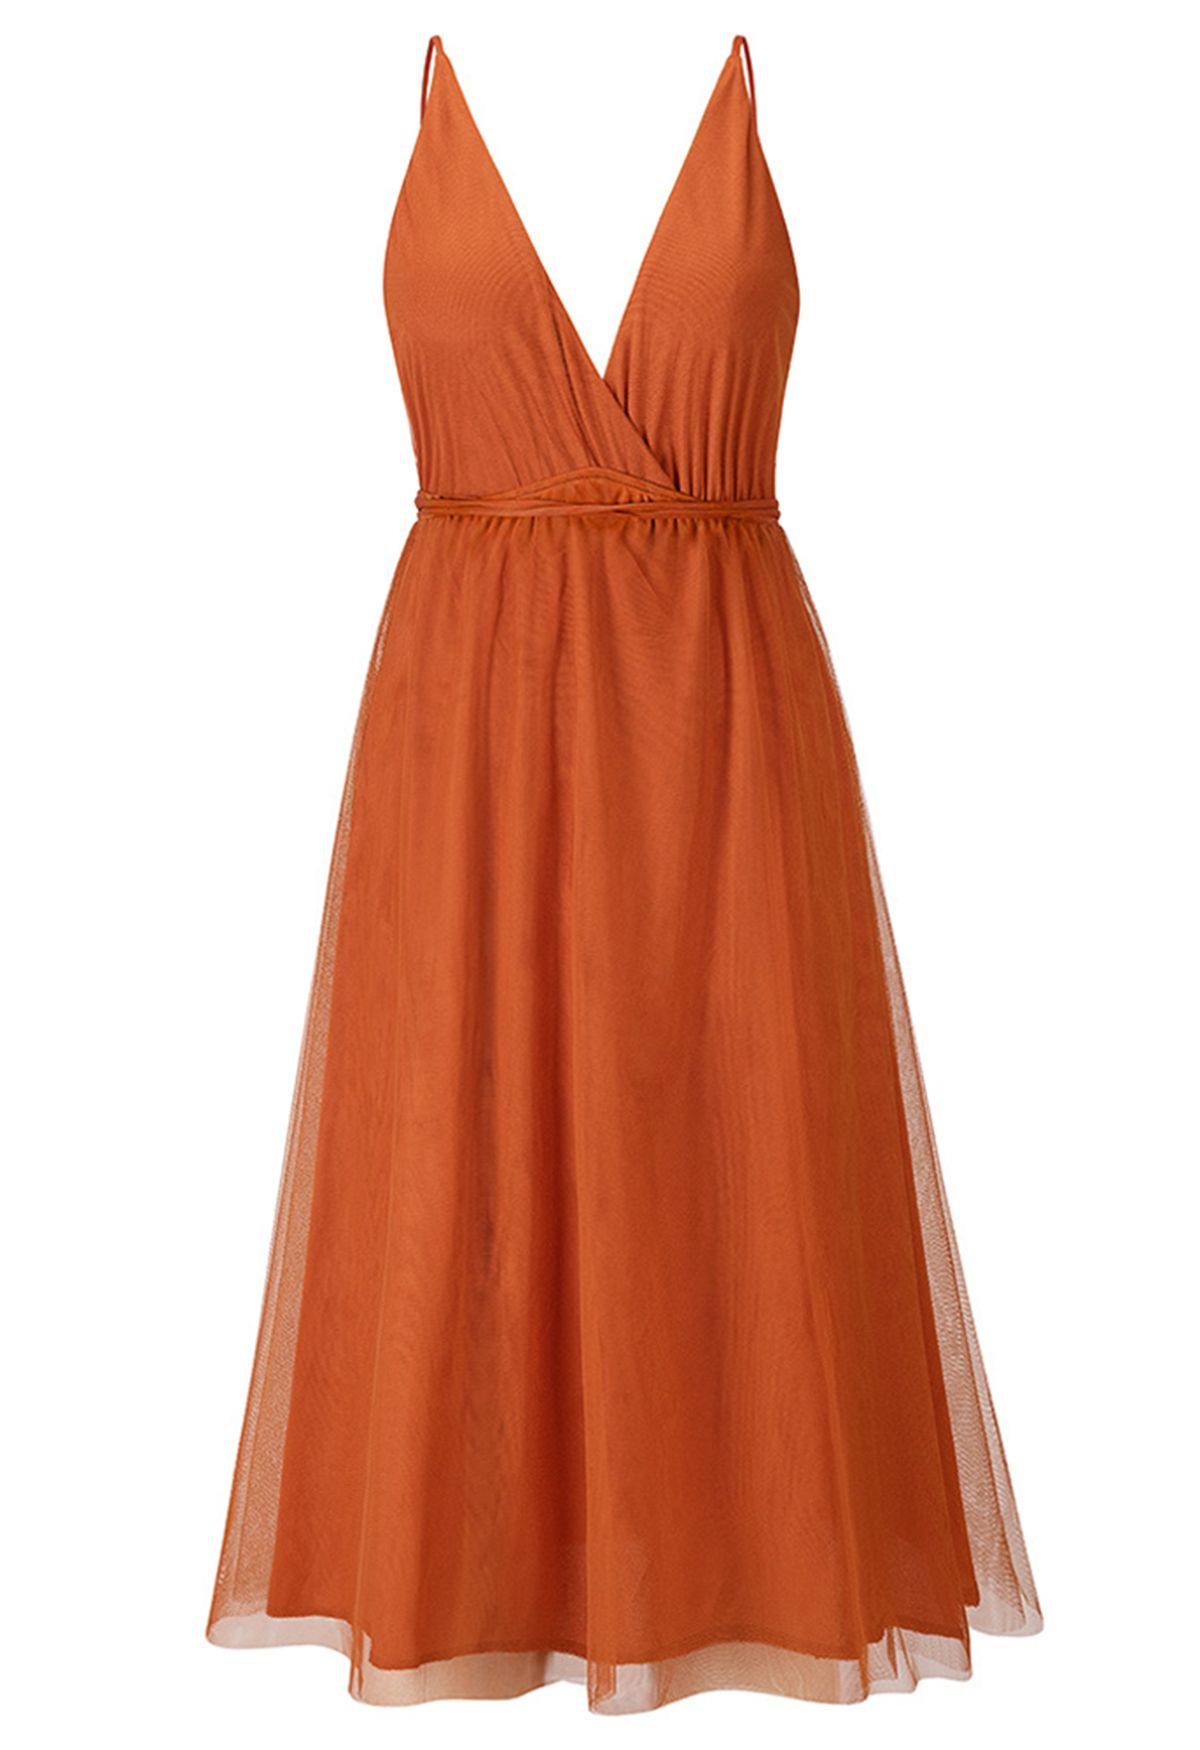 Crisscross Open Back Wrap Mesh Tulle Dress in Orange - Retro